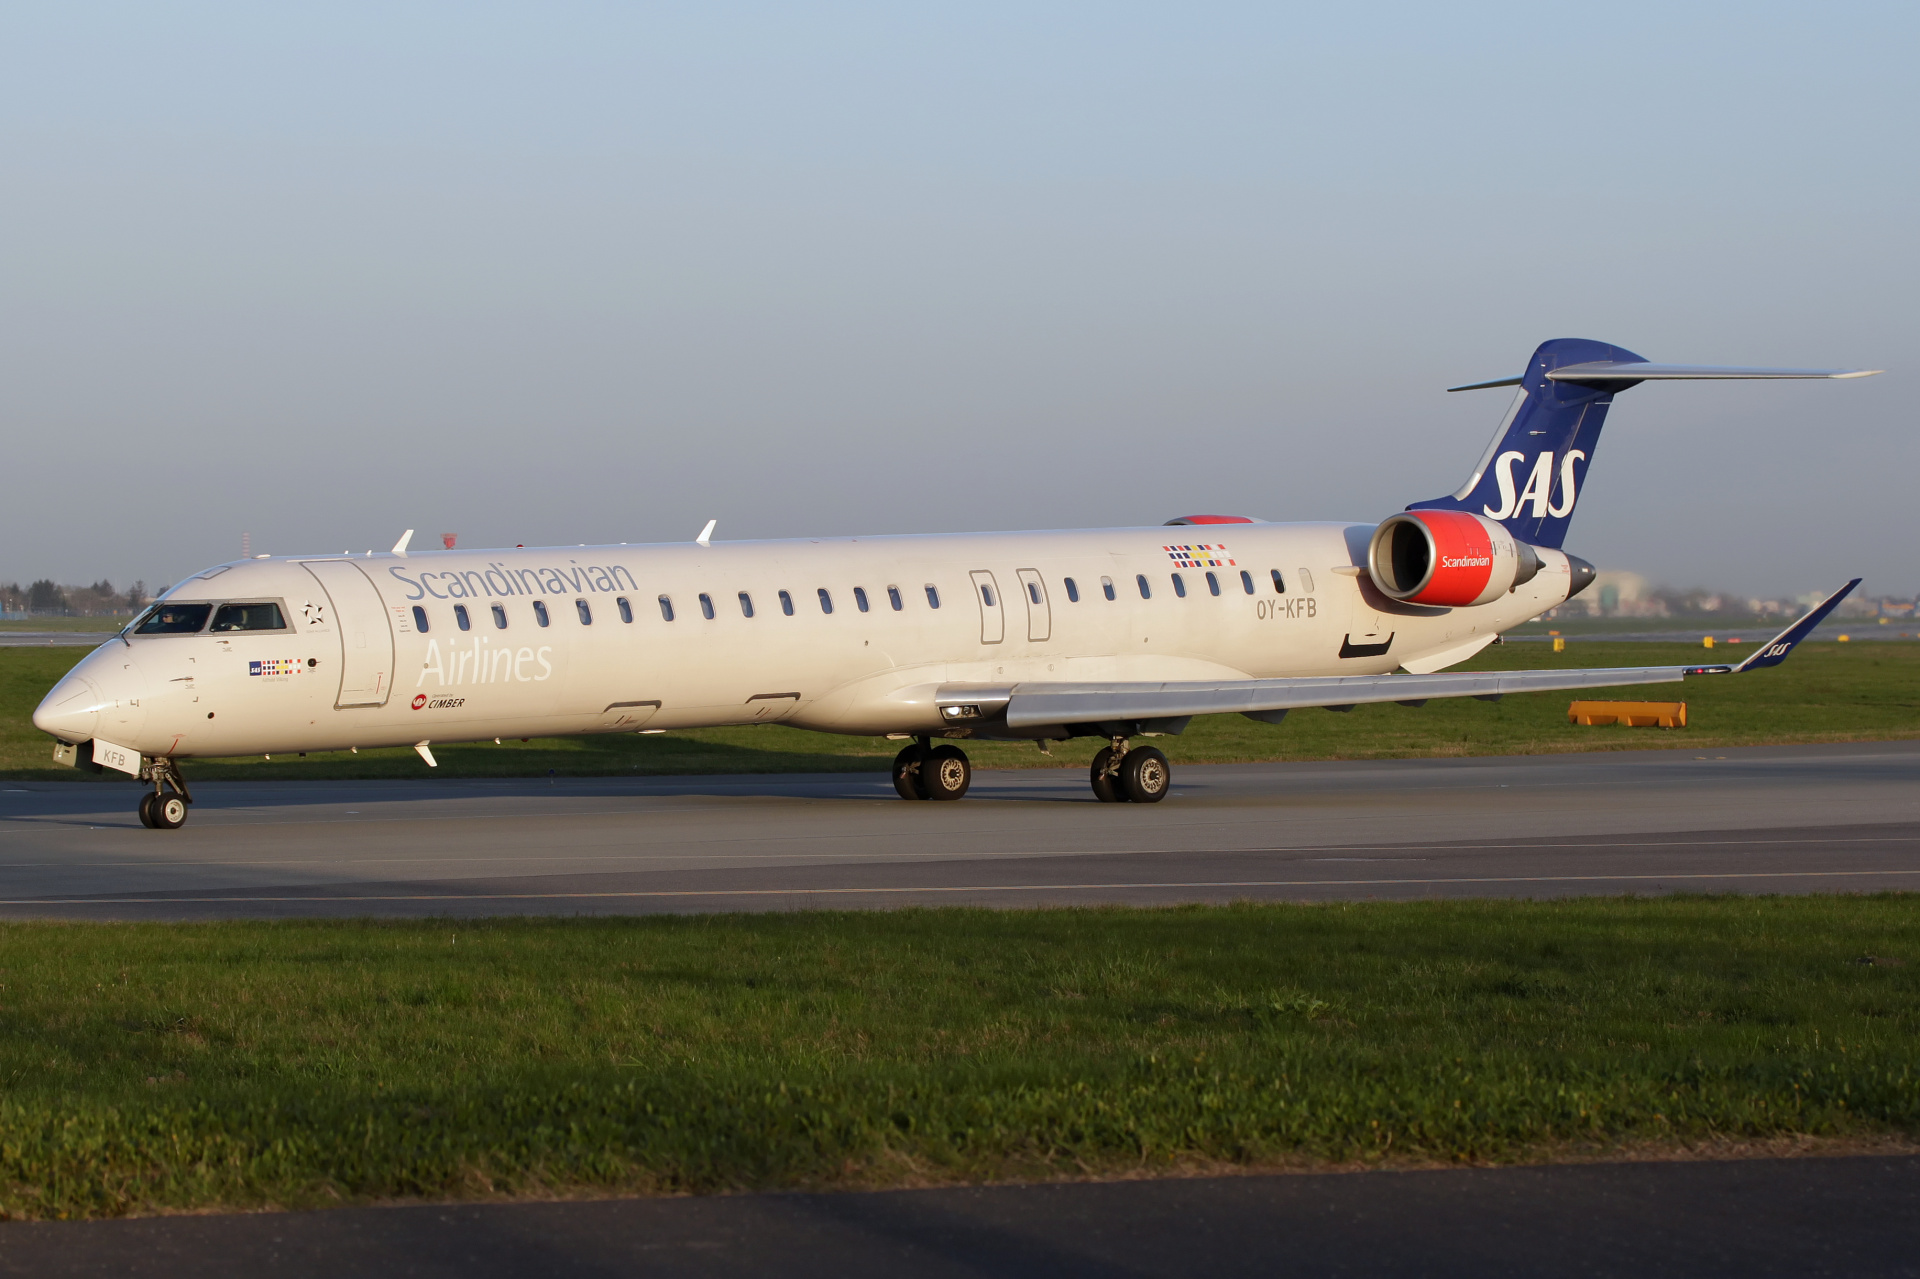 OY-KFB (Cimber Air) (Aircraft » EPWA Spotting » Mitsubishi Regional Jet » CRJ-900 » SAS Scandinavian Airlines)